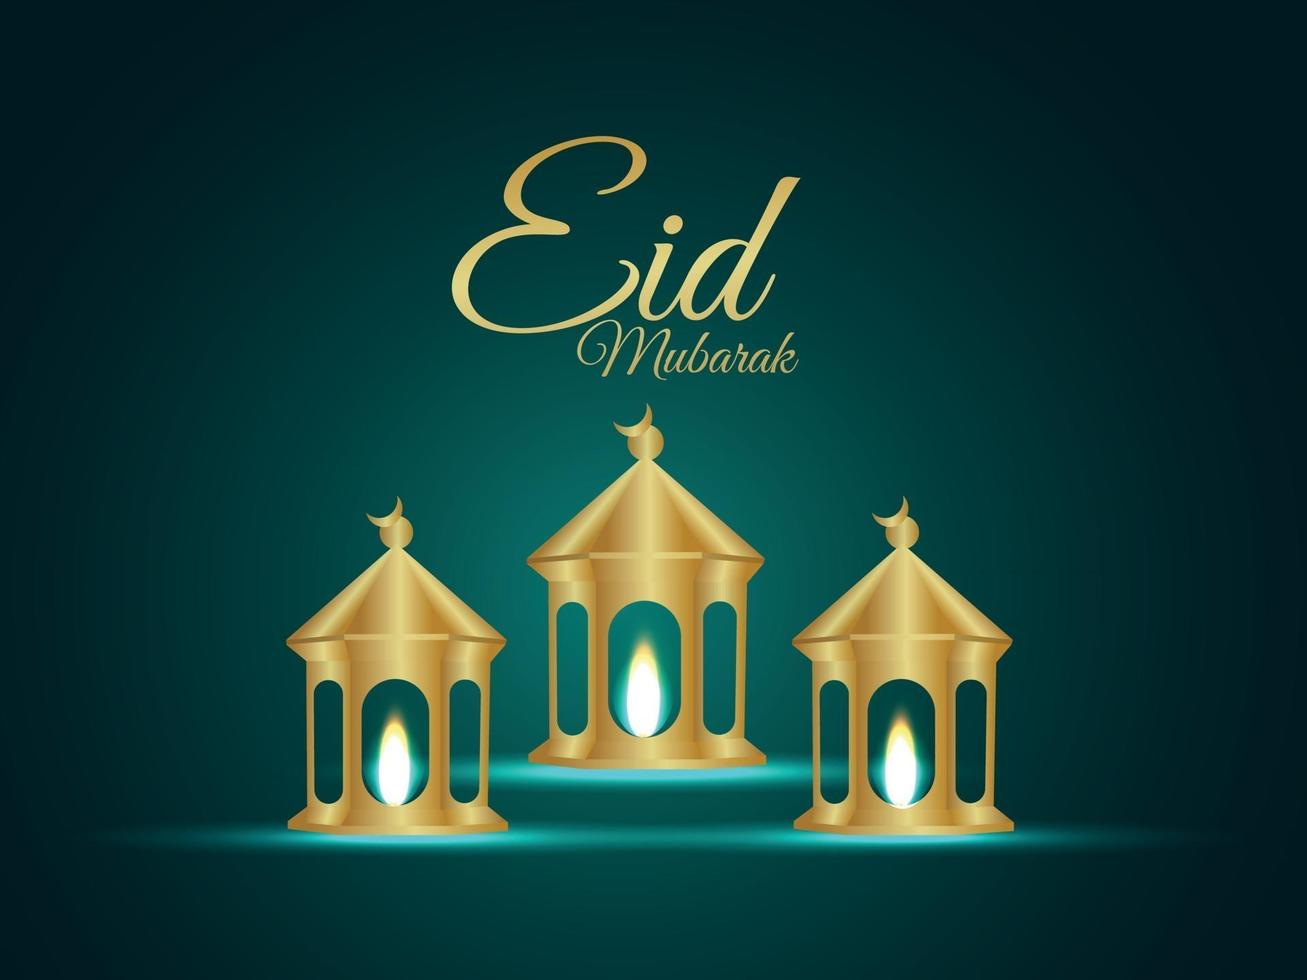 Eid mubarak invitation greeting card with vector illustration of golden lantern on creative background